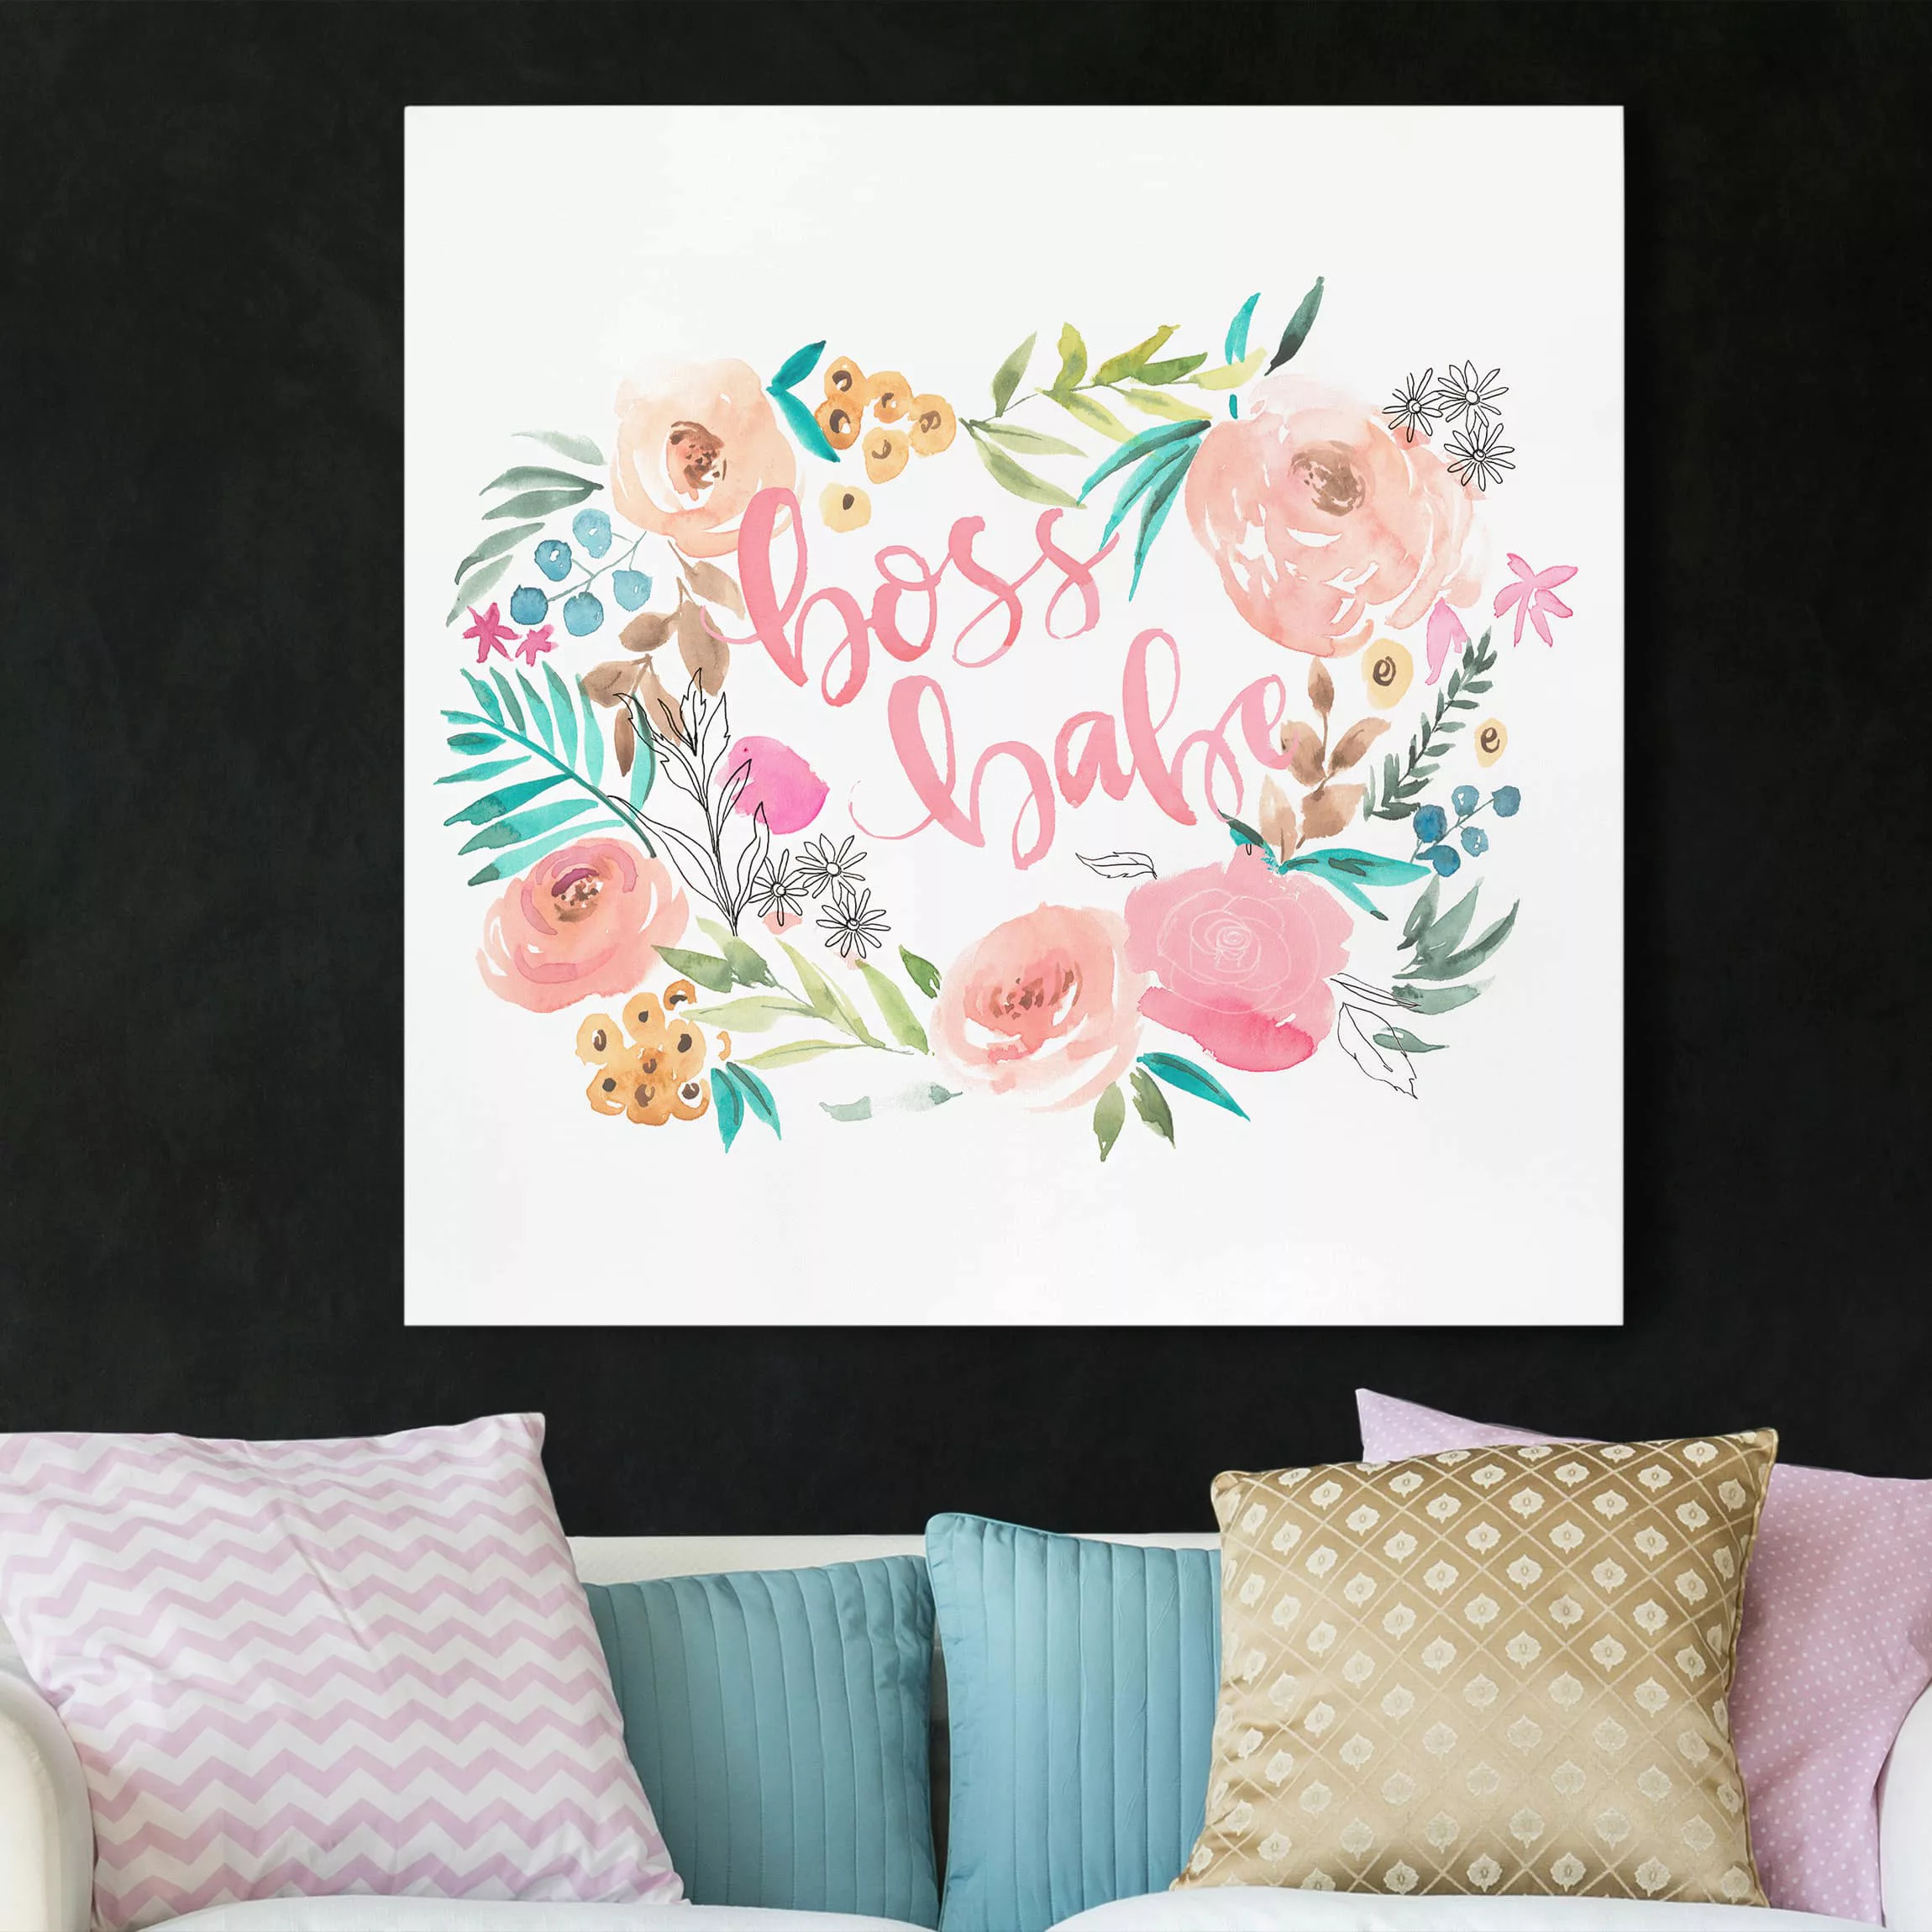 Leinwandbild Kinderzimmer - Quadrat Rosa Blüten - Boss Babe günstig online kaufen